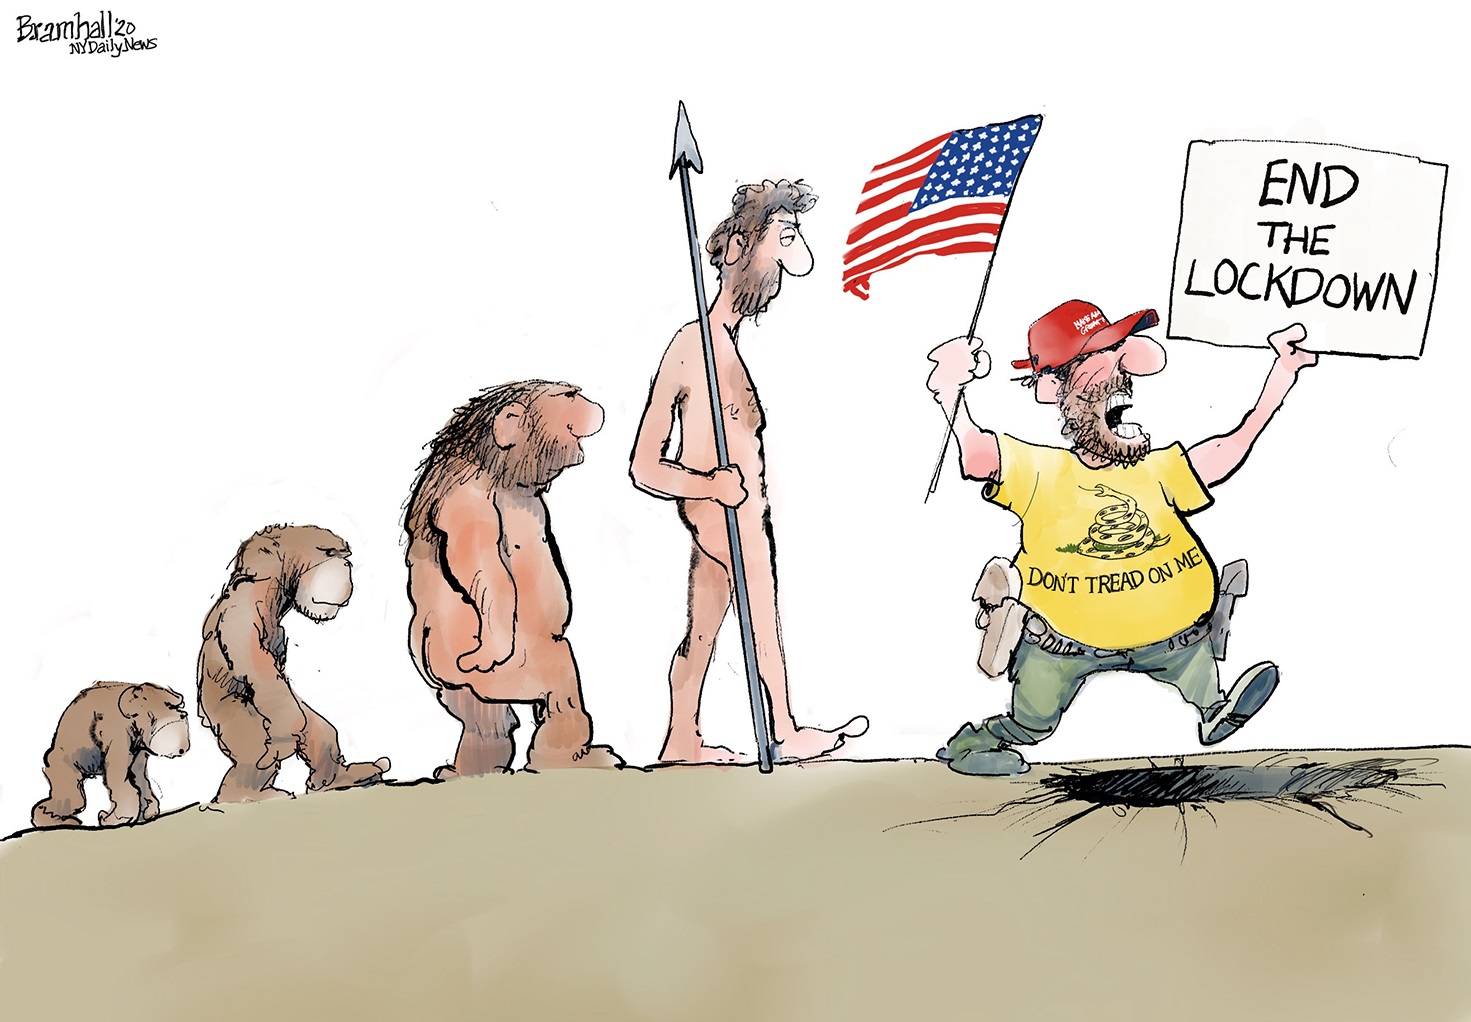 Political Cartoon U.S. end lockdown human evolution descends